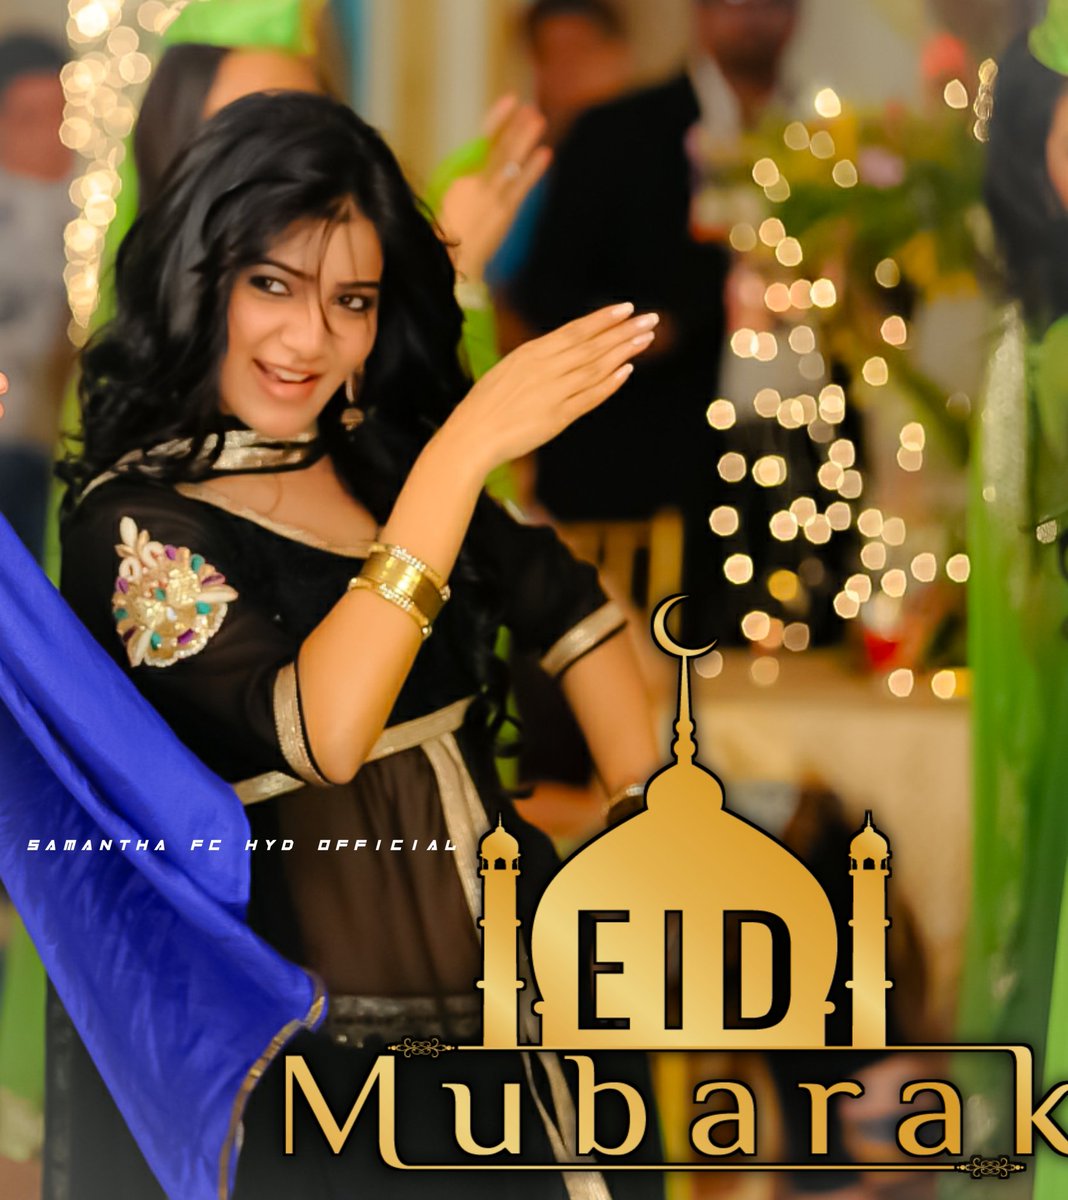 Happy Eid Mubarak Friends 😊
#HappyEid2020